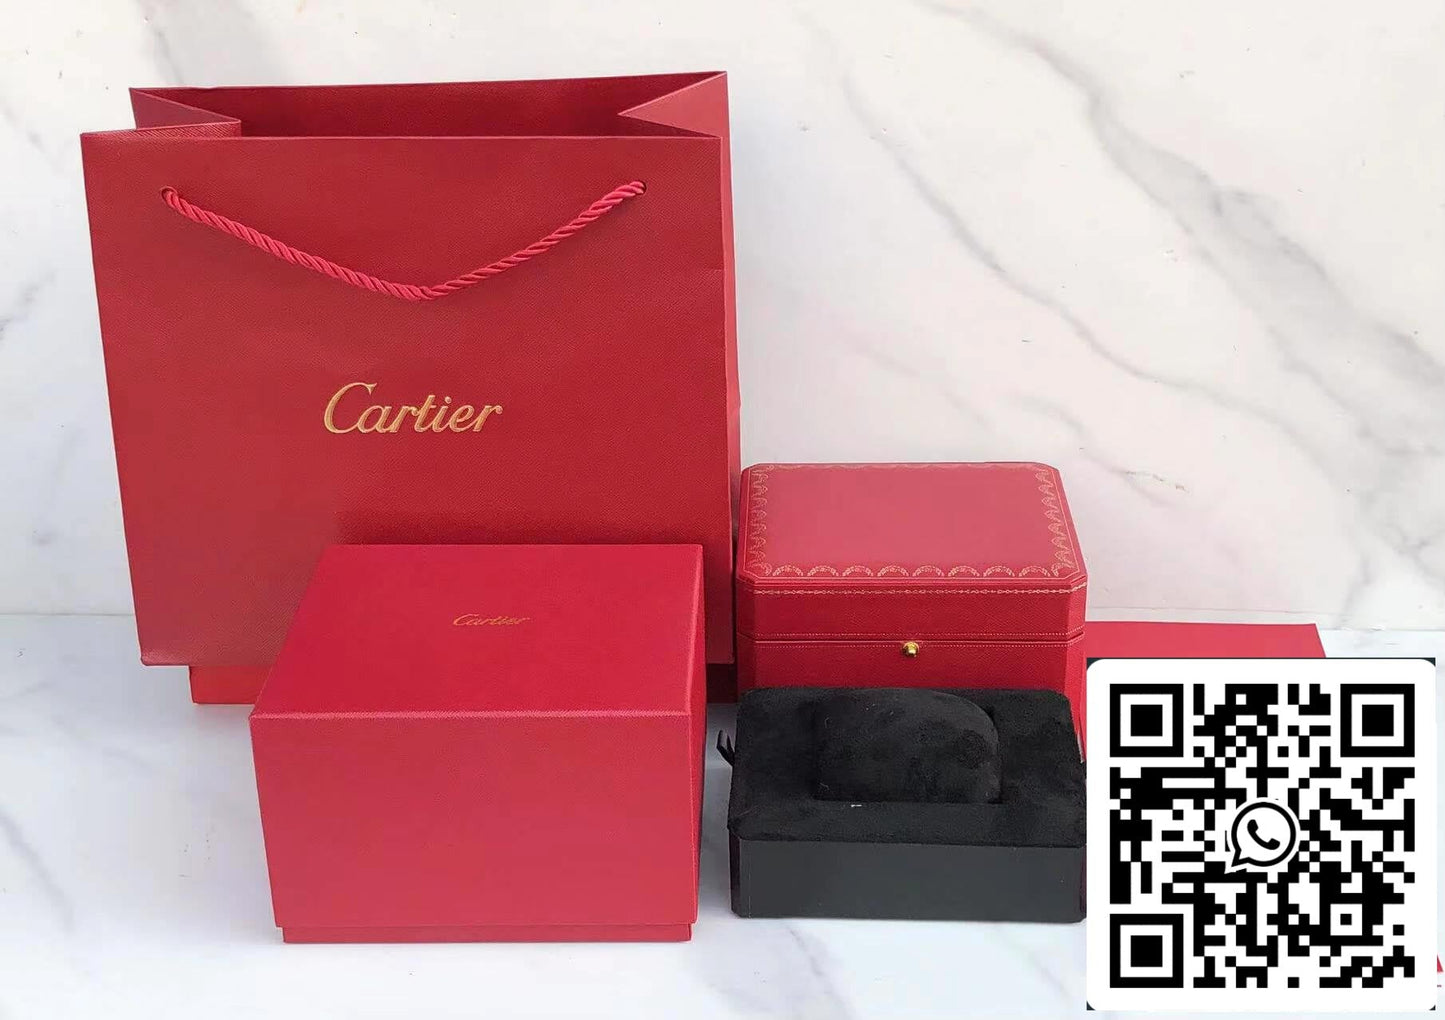 Cartier Watch Box as Original - Best version in the market US Replica Watch